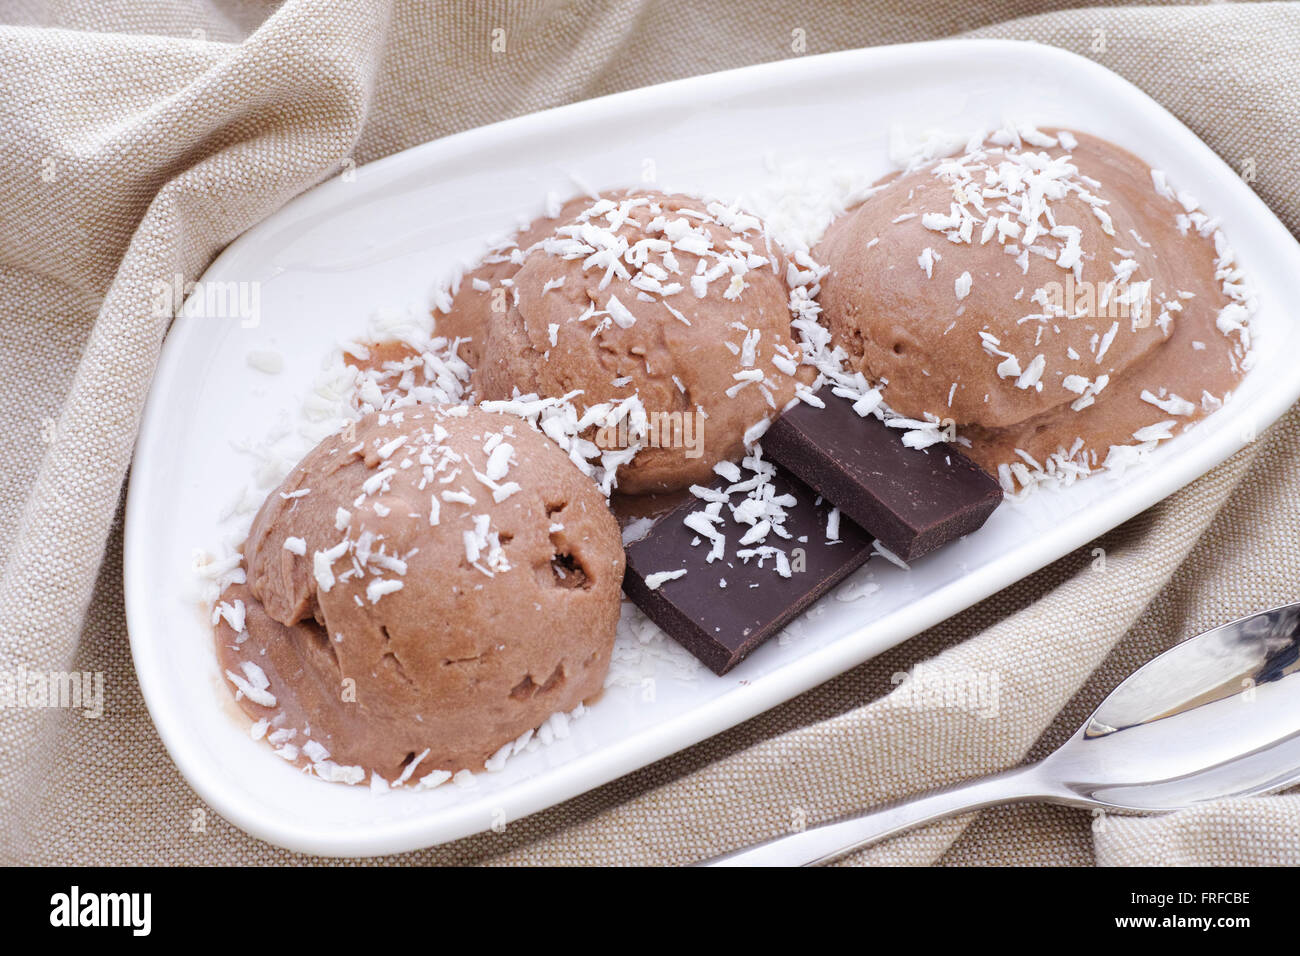 Three scoops of vegan chocolate ice cream with coconut sprinkles and pieces of broken chocolate. (coconut cream, cocoa powder) Stock Photo